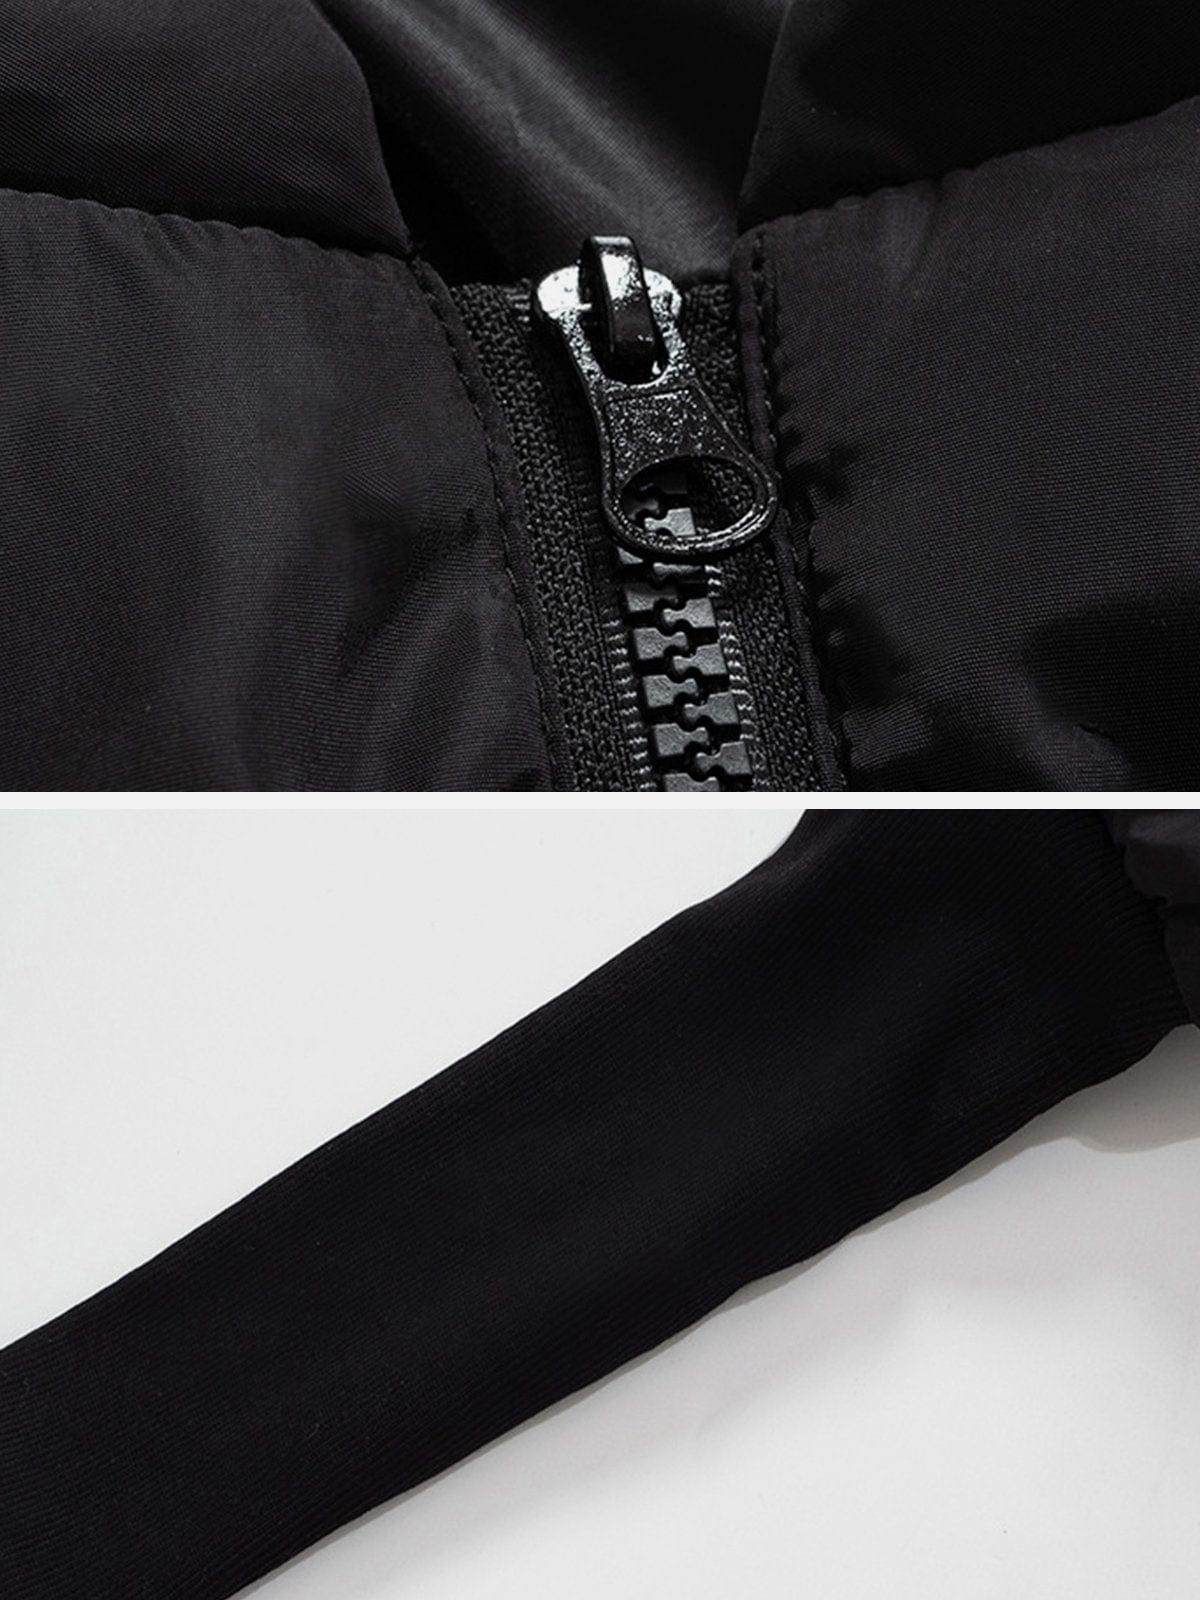 Tilt Pocket Stand Collar Winter Coat Streetwear Brand Techwear Combat Tactical YUGEN THEORY